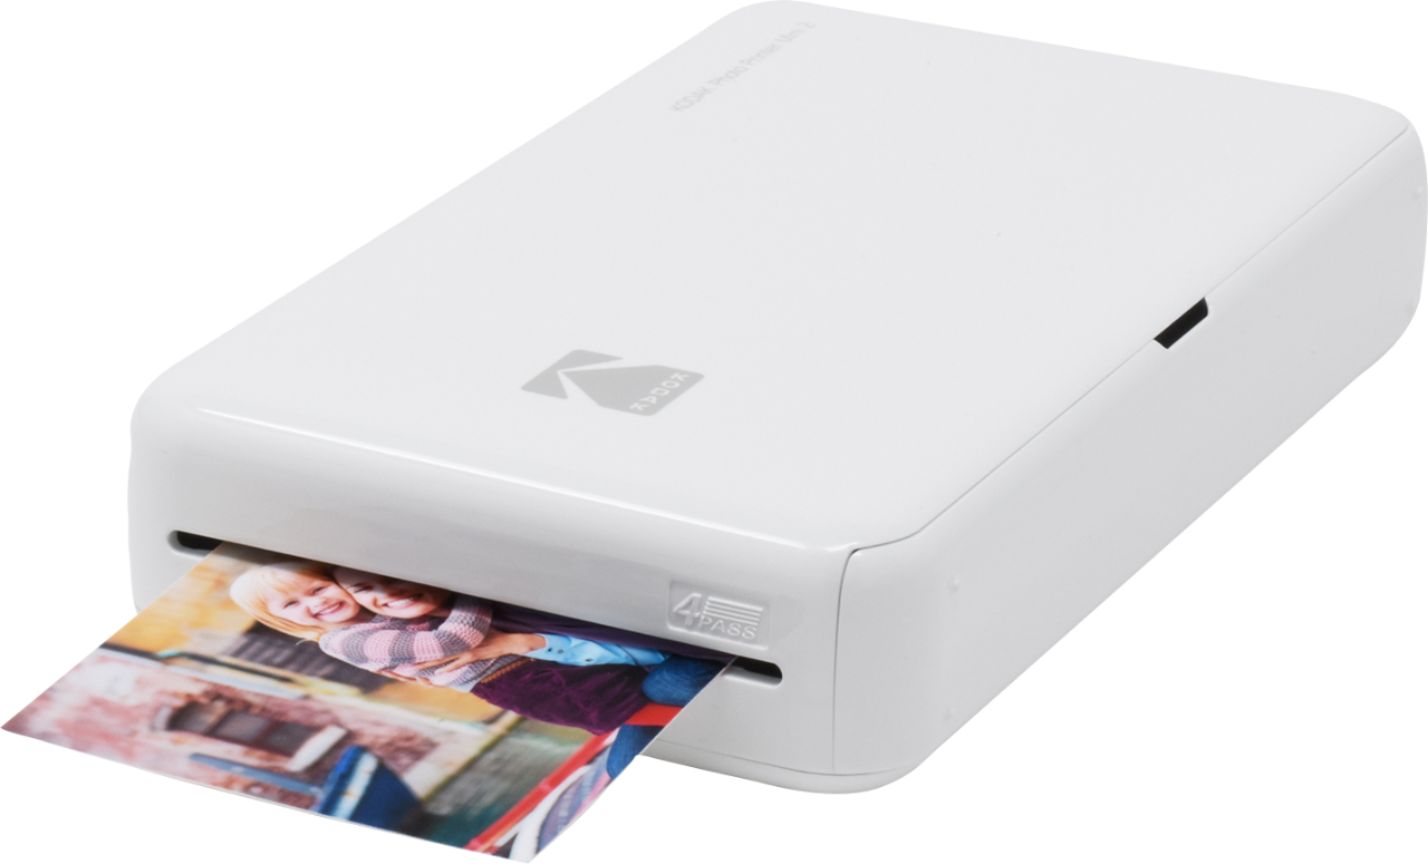 Kodak Step Instant Photo Printer with 2 x 3 Zink Photo Paper & Deluxe  Case Pink AMZRODMP20K2PK - Best Buy